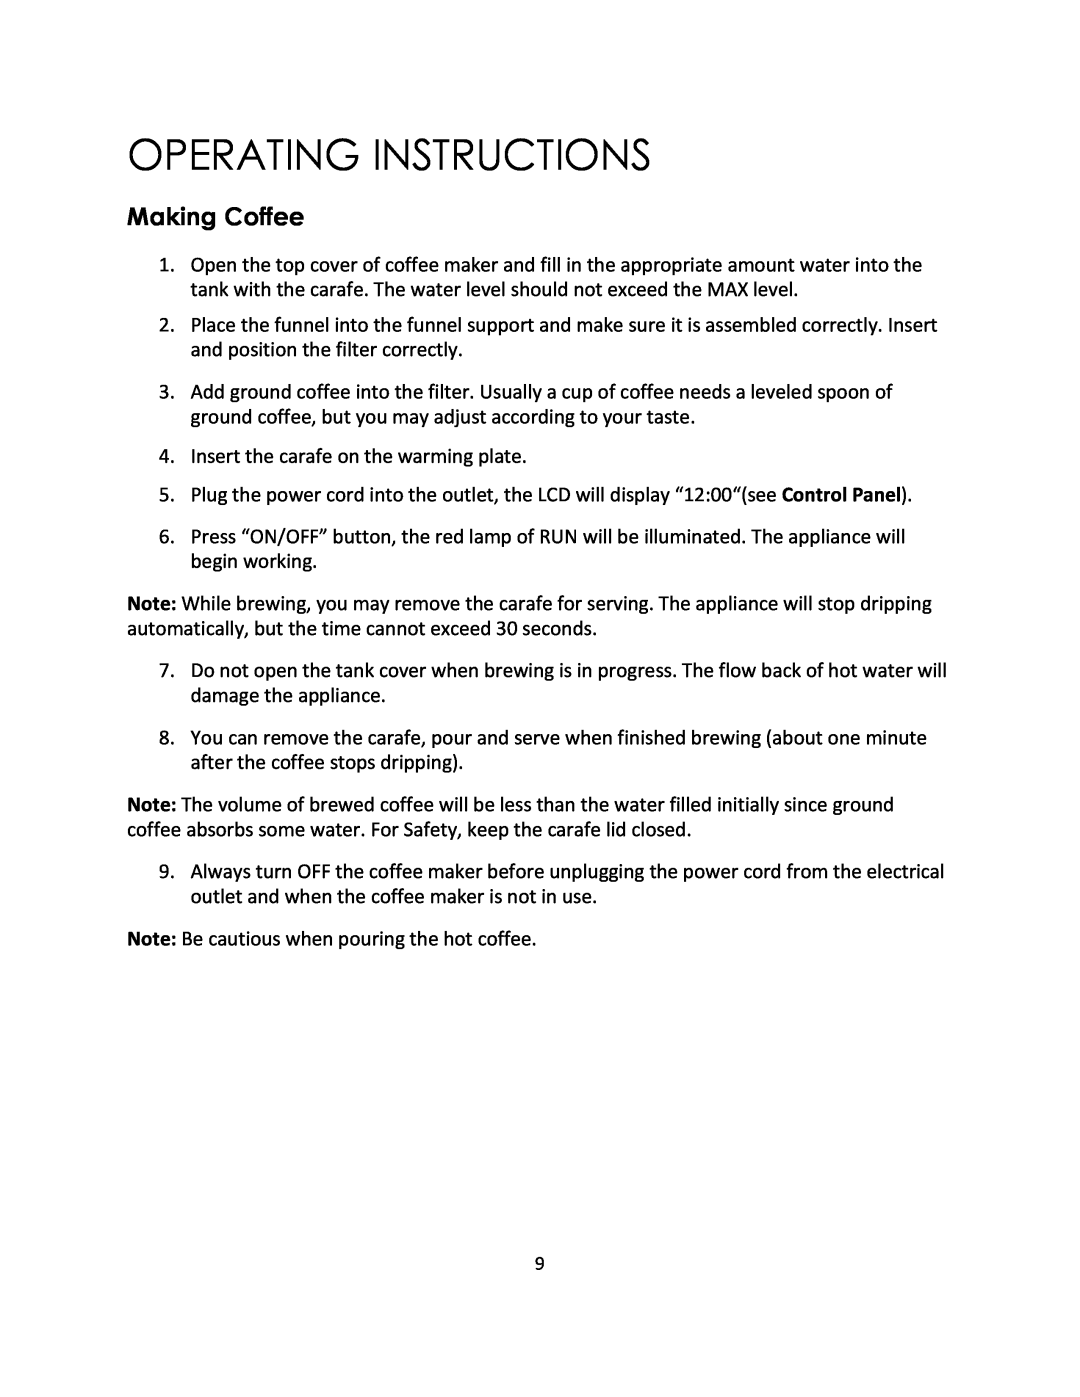 Magic Chef MCSCM12PST instruction manual Operating Instructions, Making Coffee 